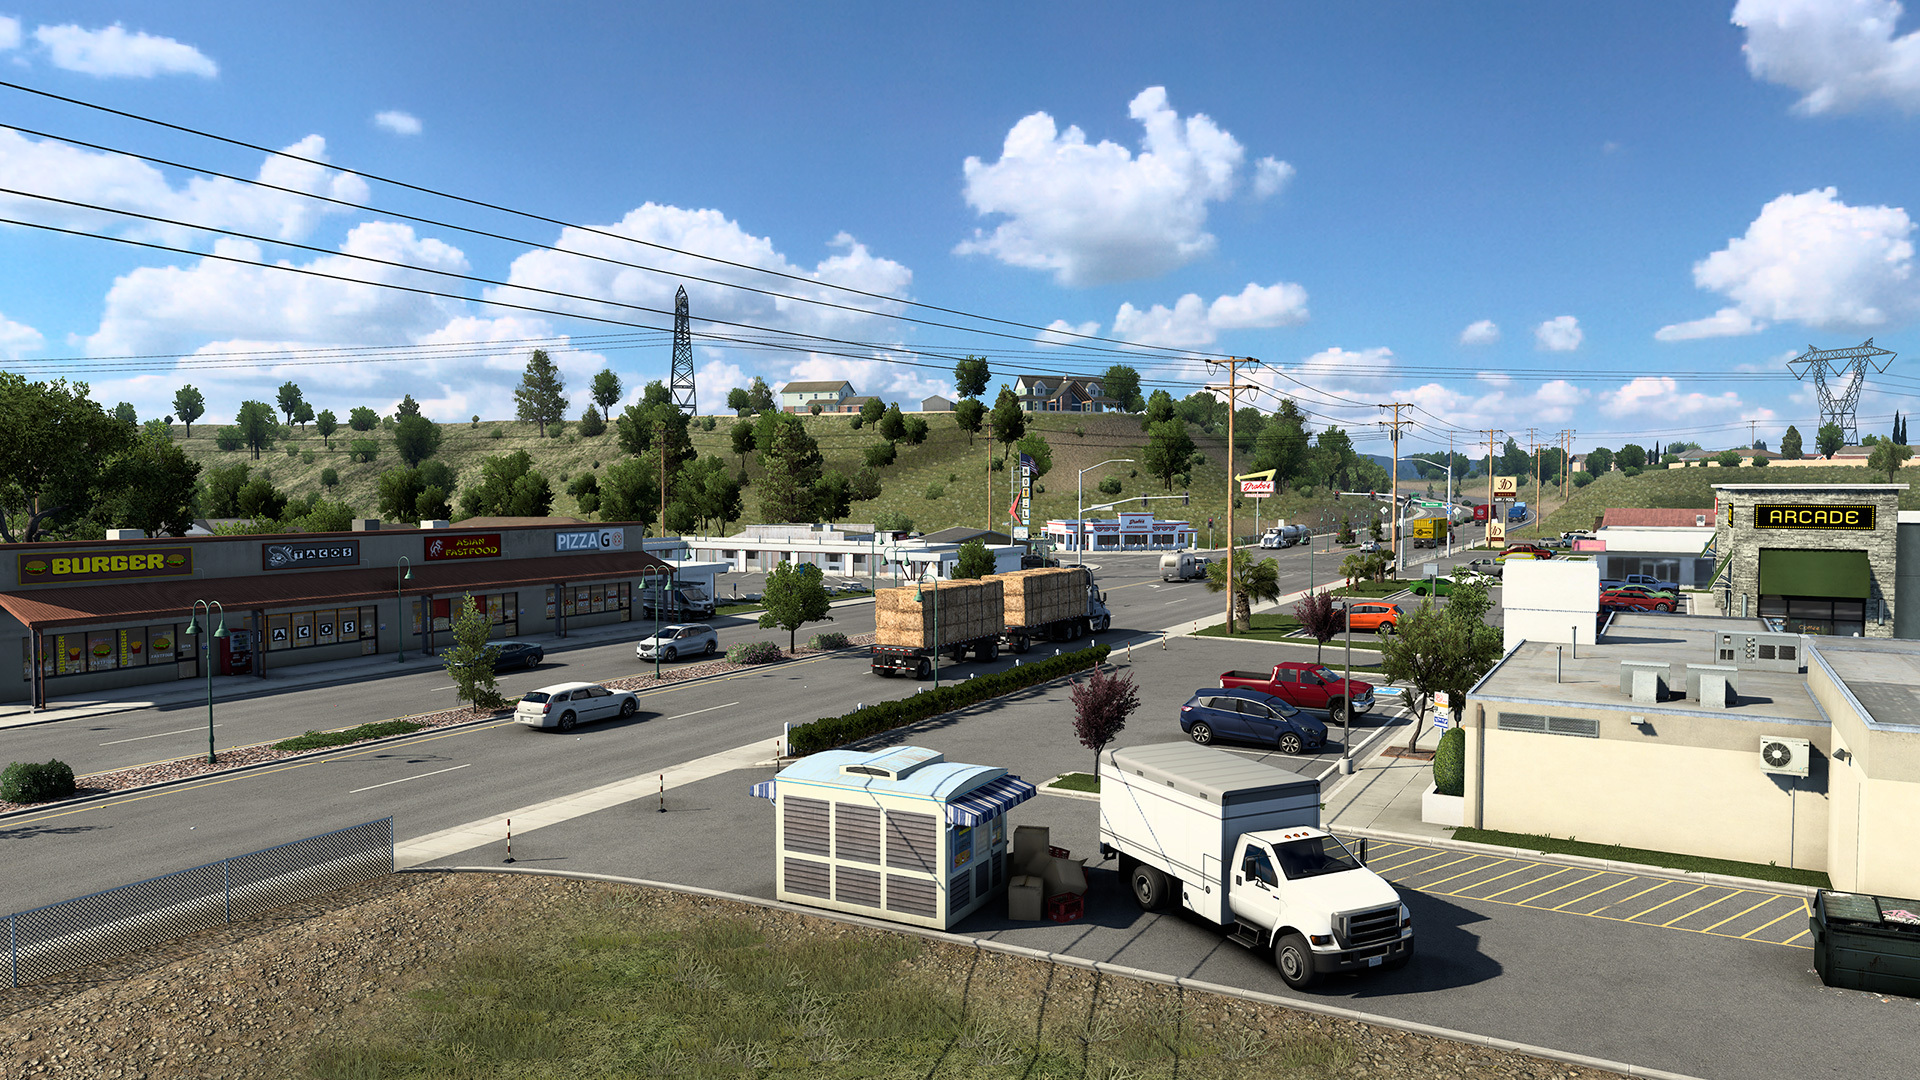 American Truck Simulator update 1.44 lets you refund mods